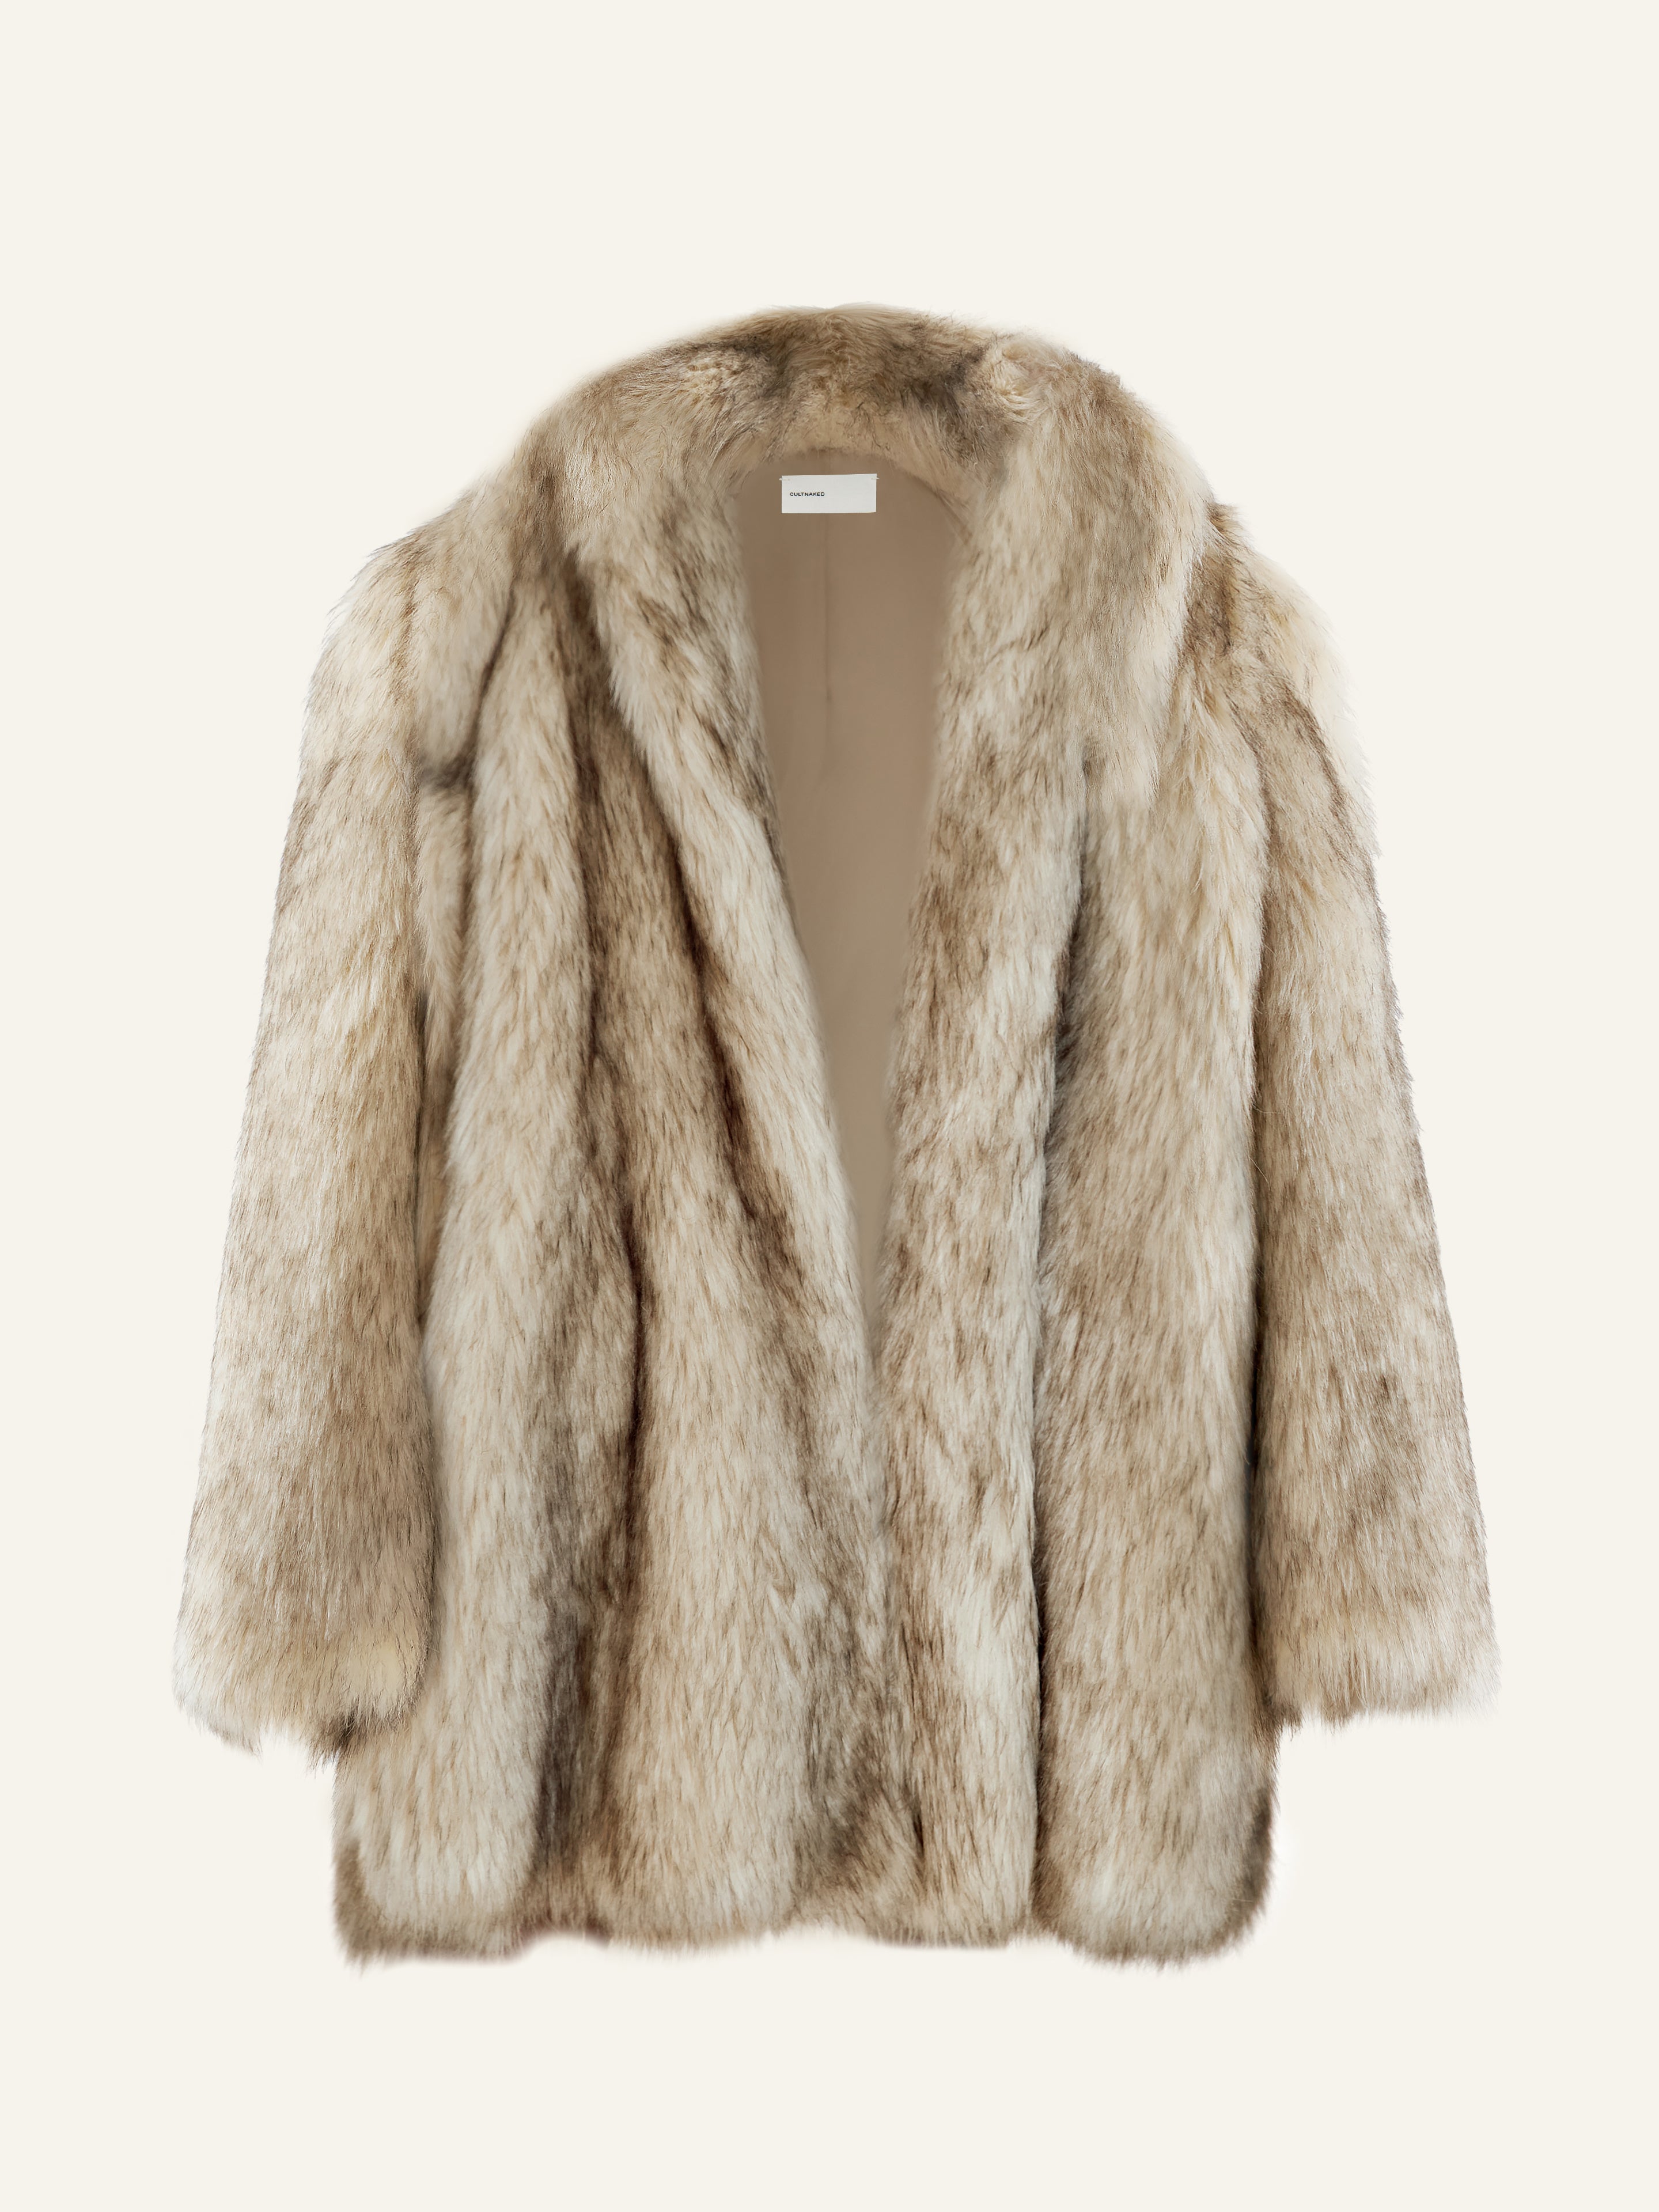 Product photo of a medium length oversized eco fur coat